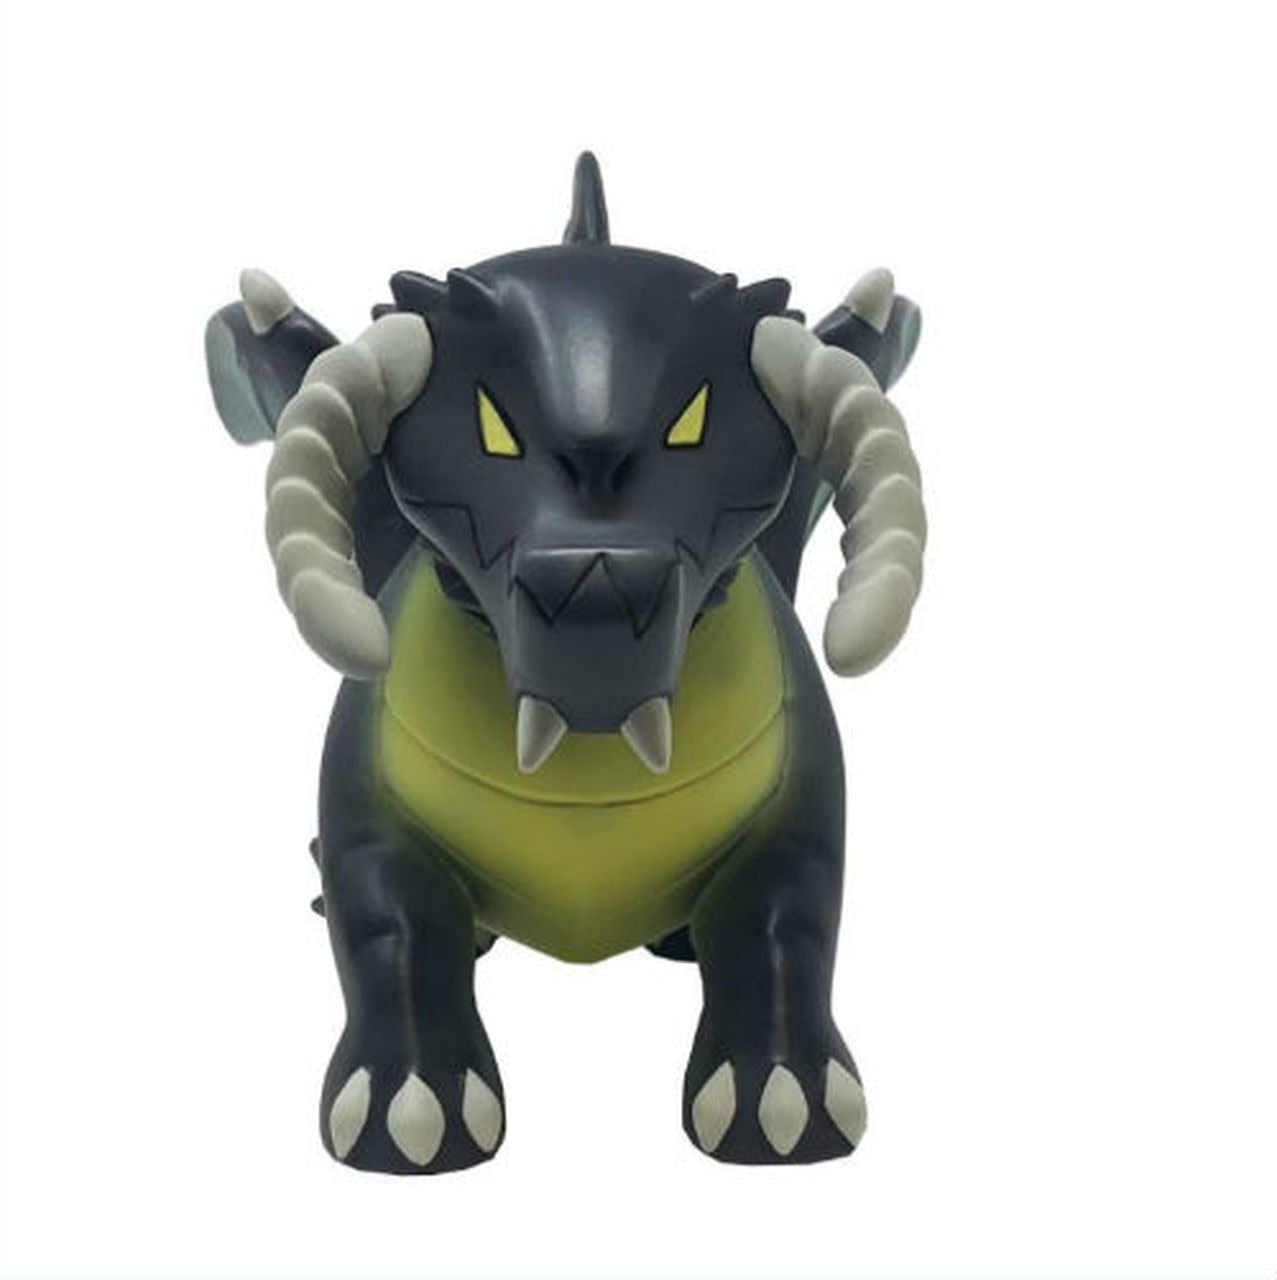 Figurines of Adorable Power - Black Dragon